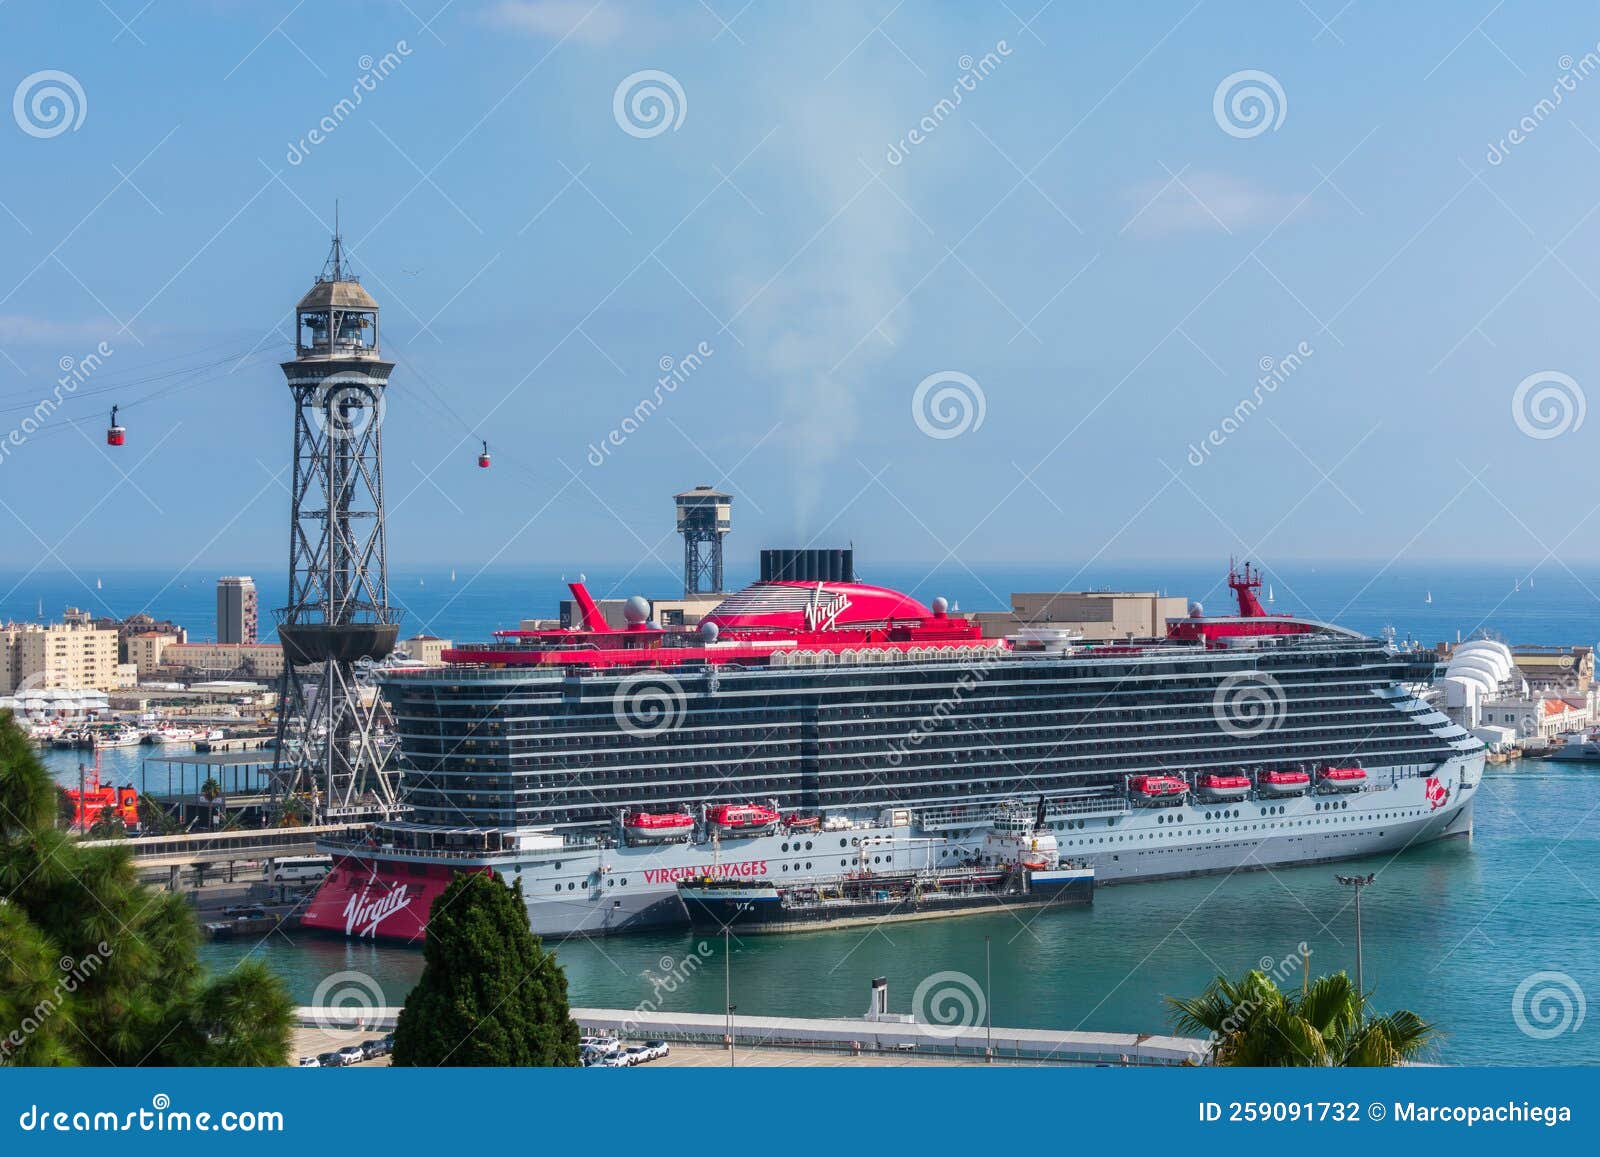 virgin cruise port barcelona